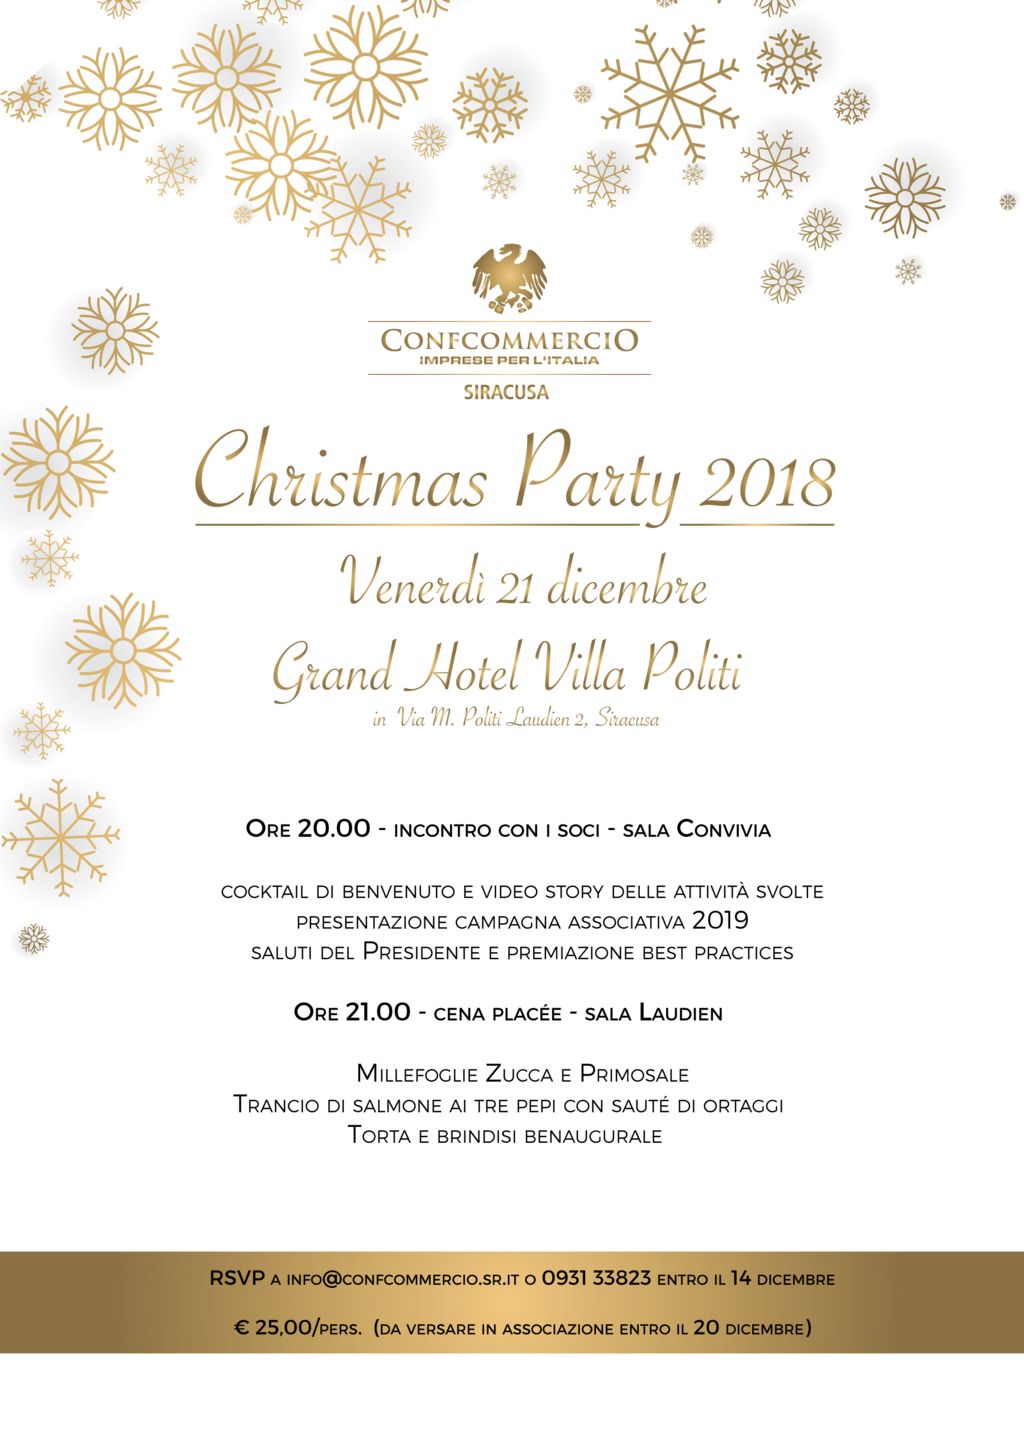 Christmas Party 2018 - INVITO AI SOCI